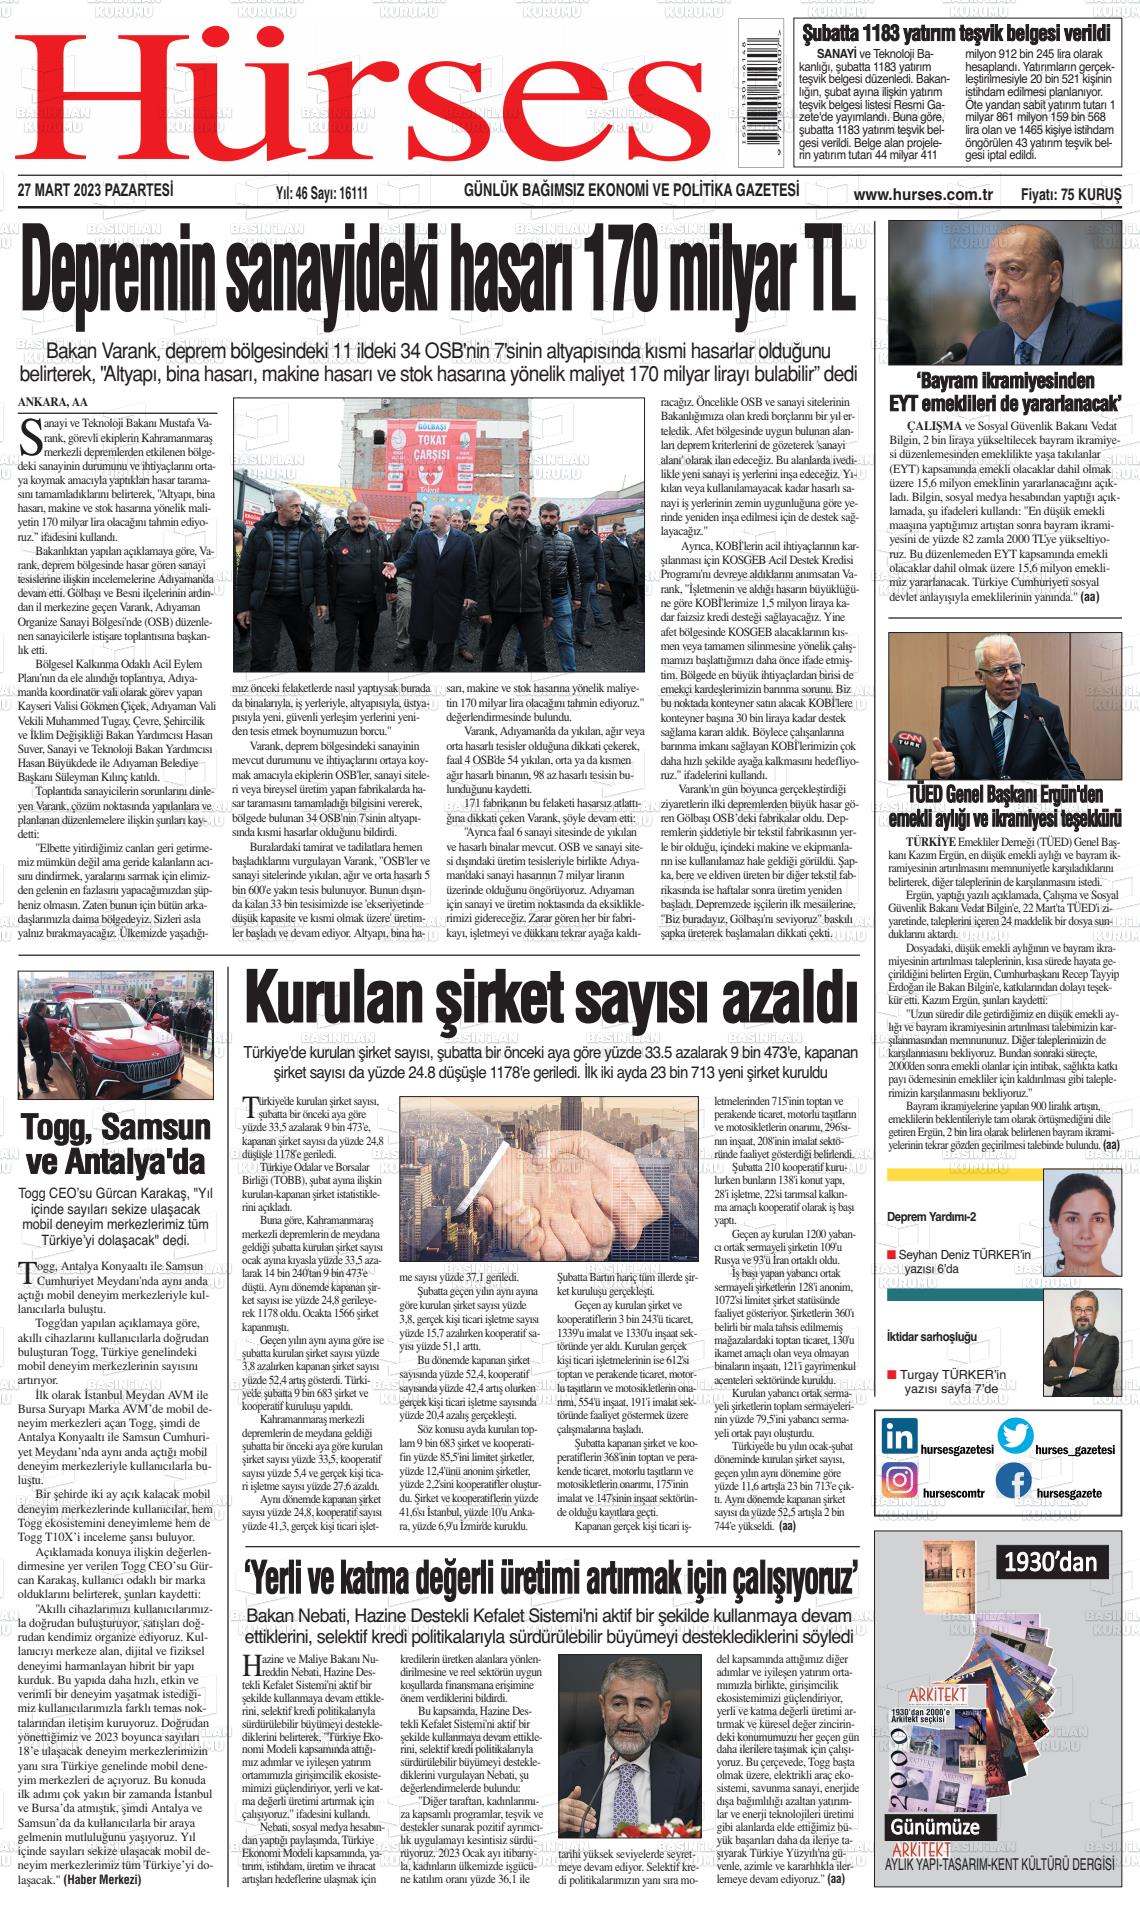 27 Mart 2023 İstanbul Hürses gazetesi Gazete Manşeti